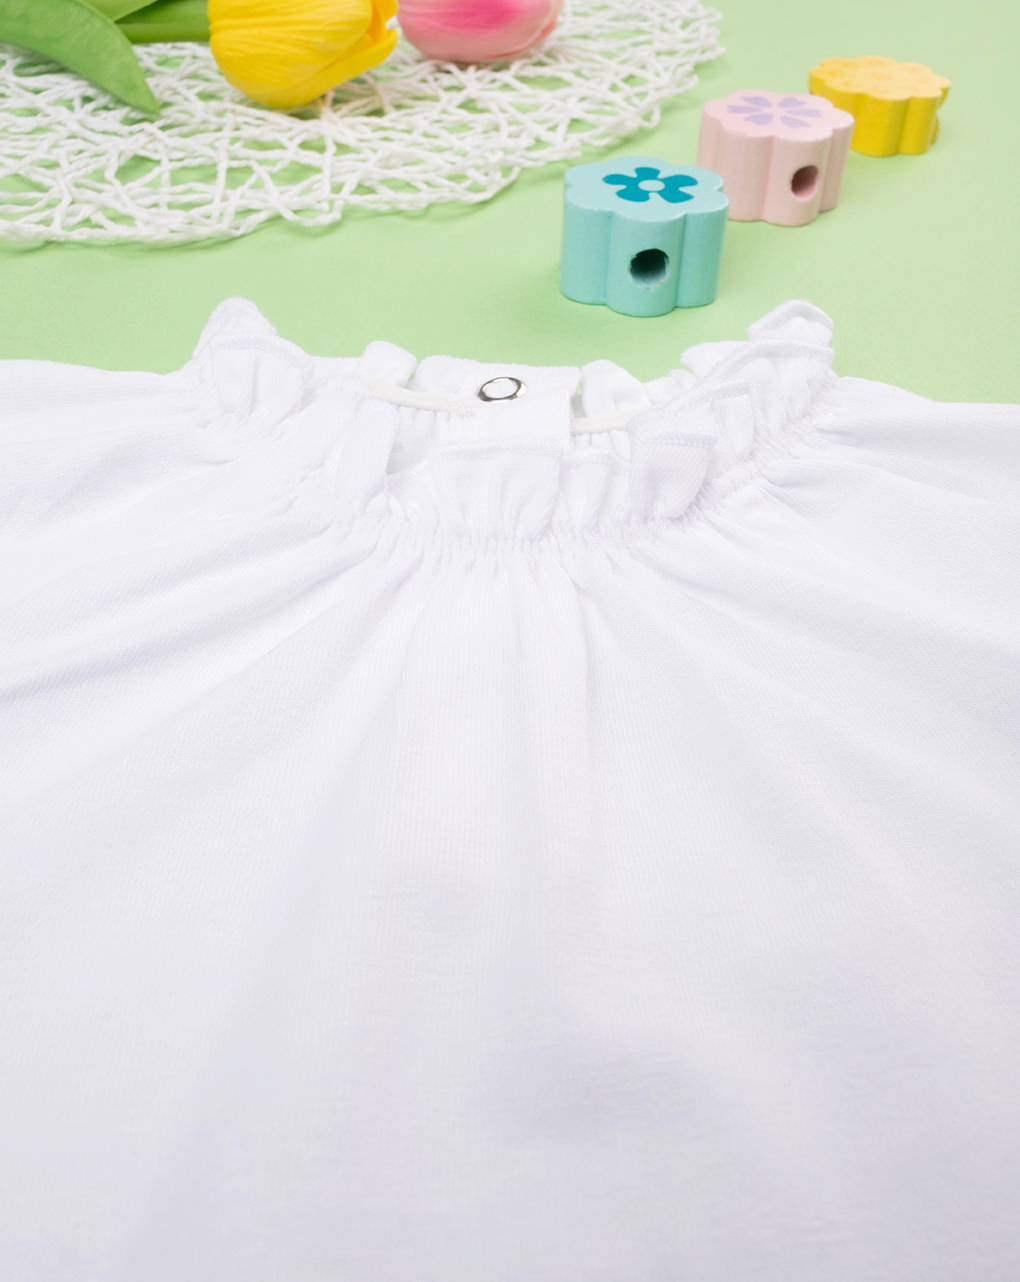 Body blanco para bebé con bordado - Prénatal